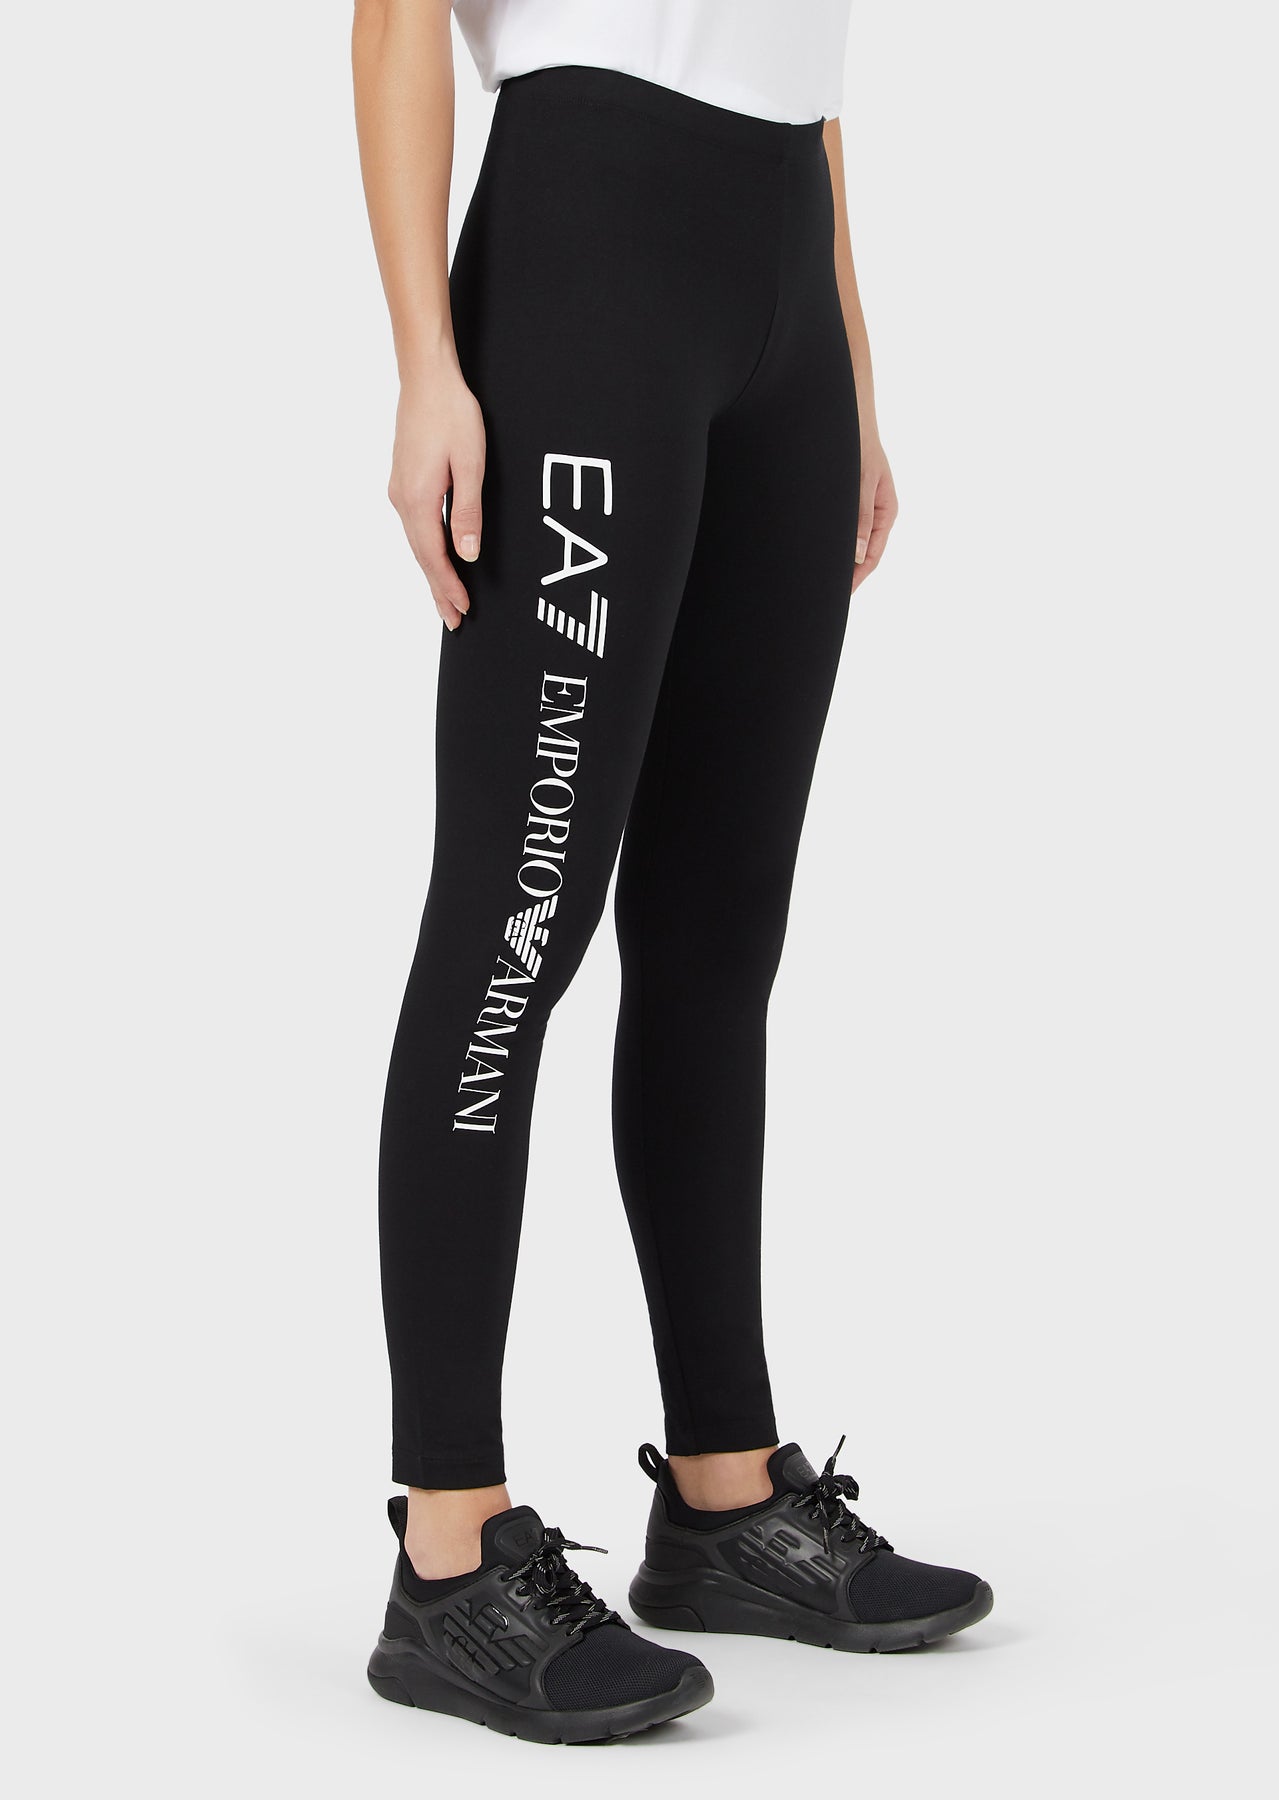 EA7 Emporio Armani Ladies Black Pantaloni Leggins – Phases Men's Fashion